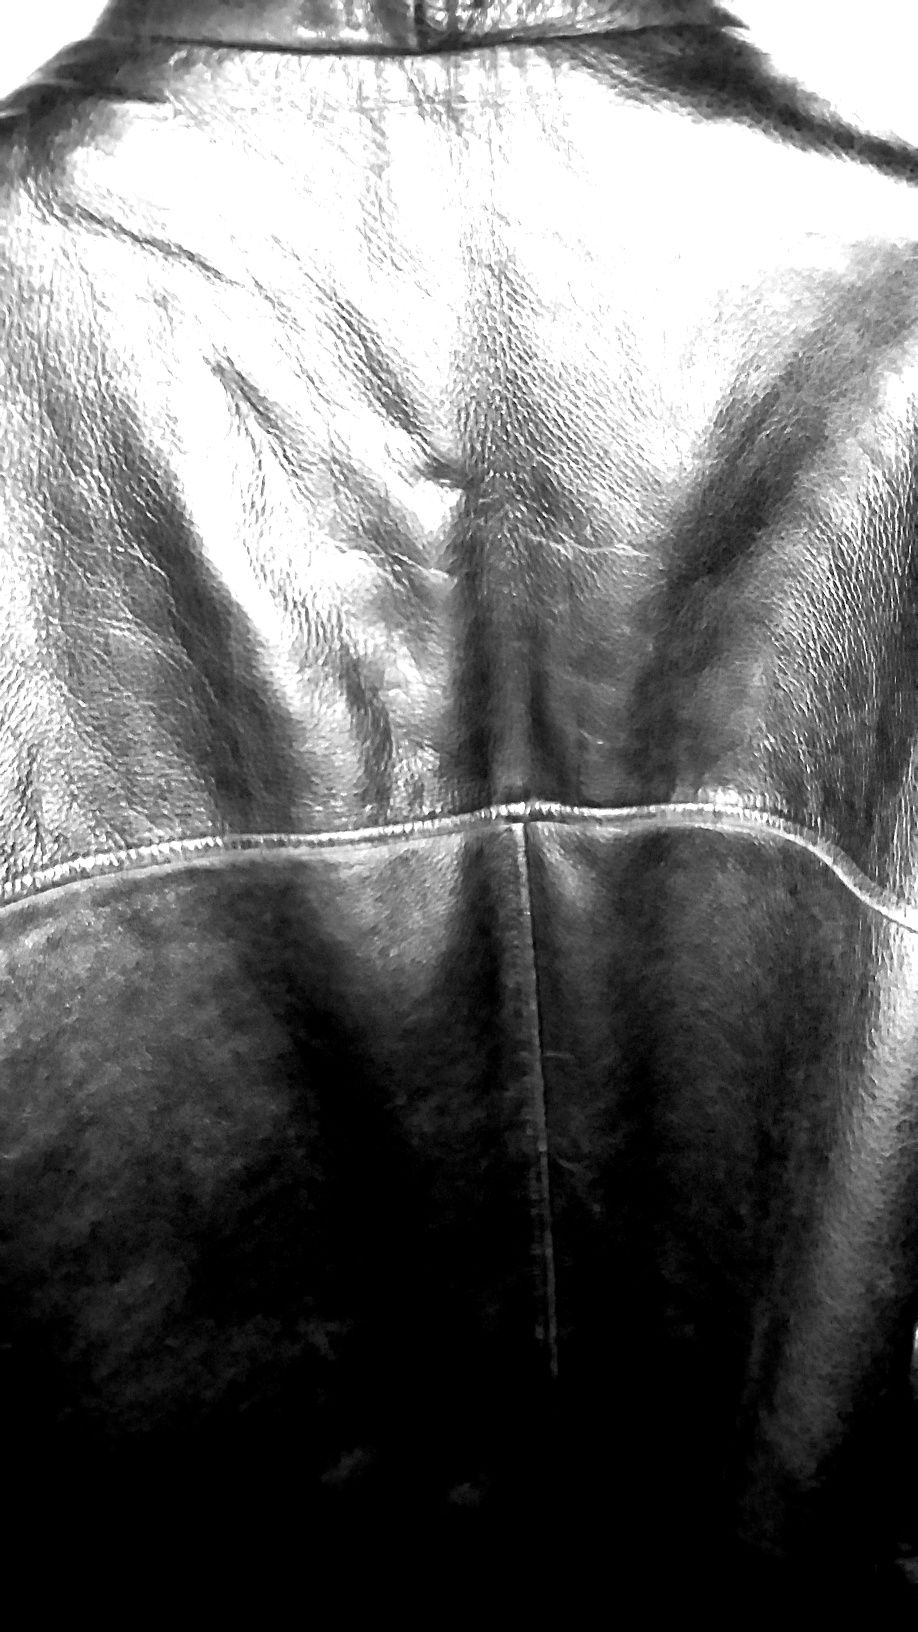 Куртки кожа осень-зима съёмная поддёвка овчина фирмы Laffette Italia